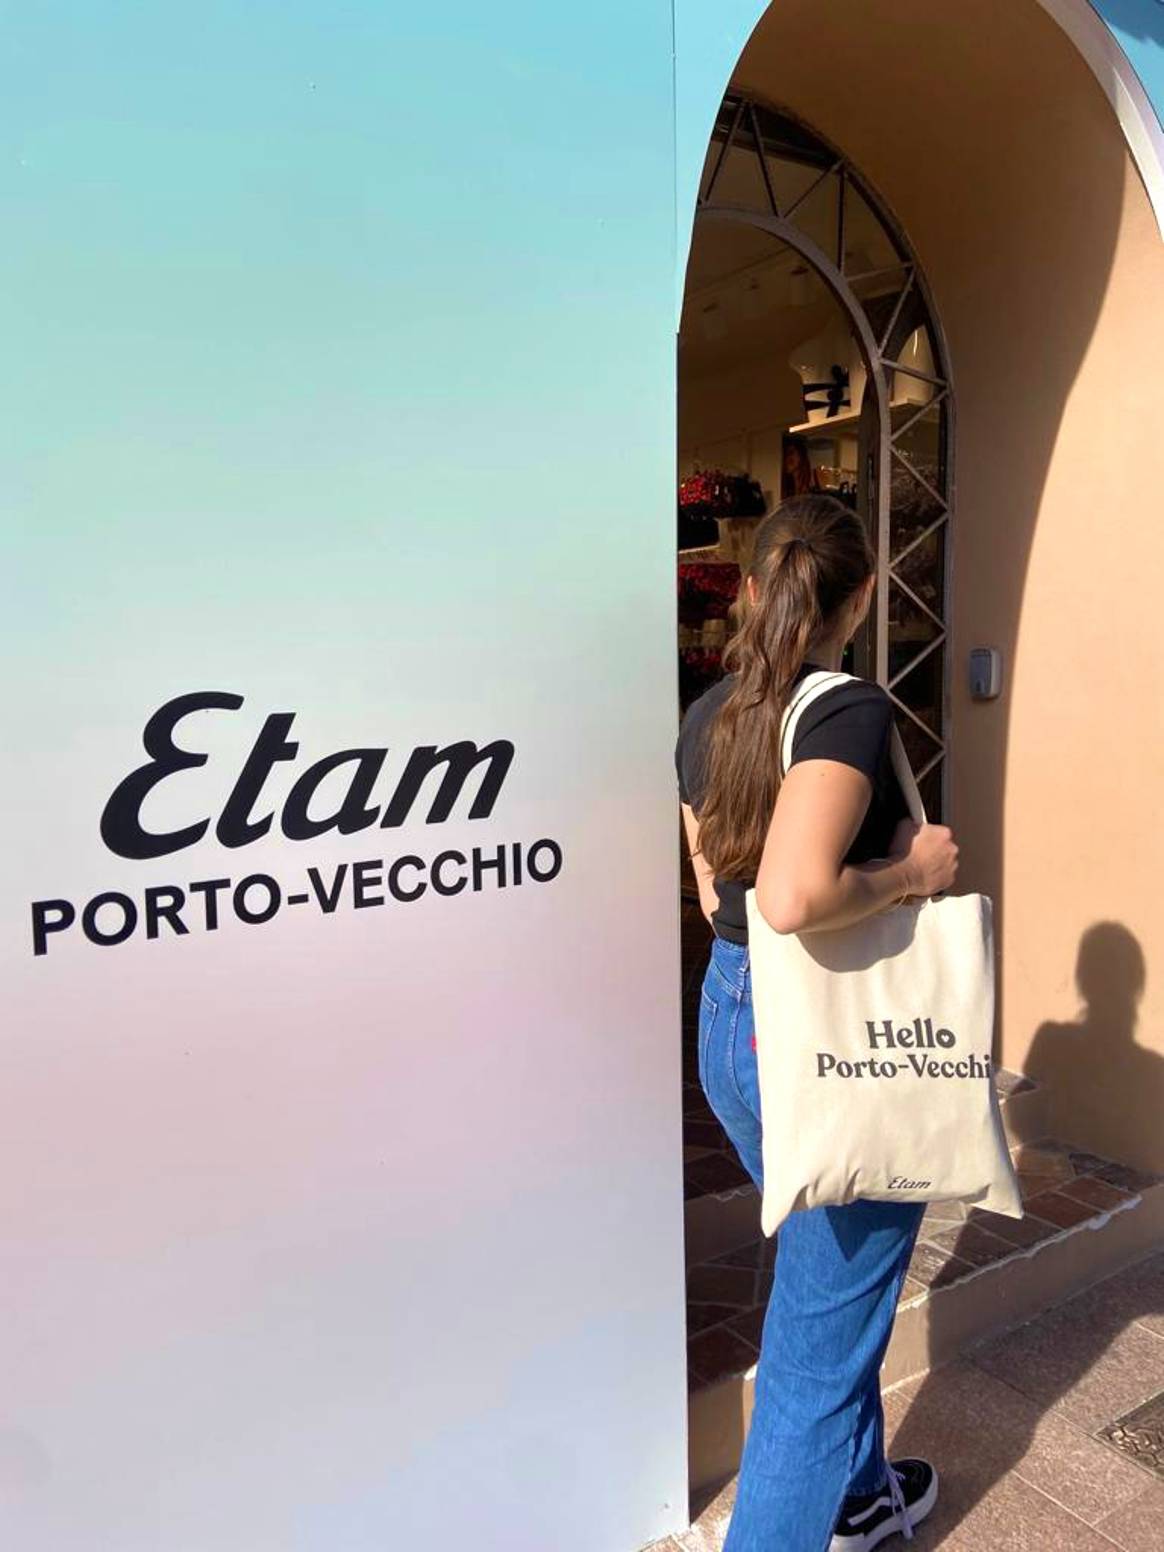 Pop-up Etam Porto Vecchio. Courtesy of Etam.